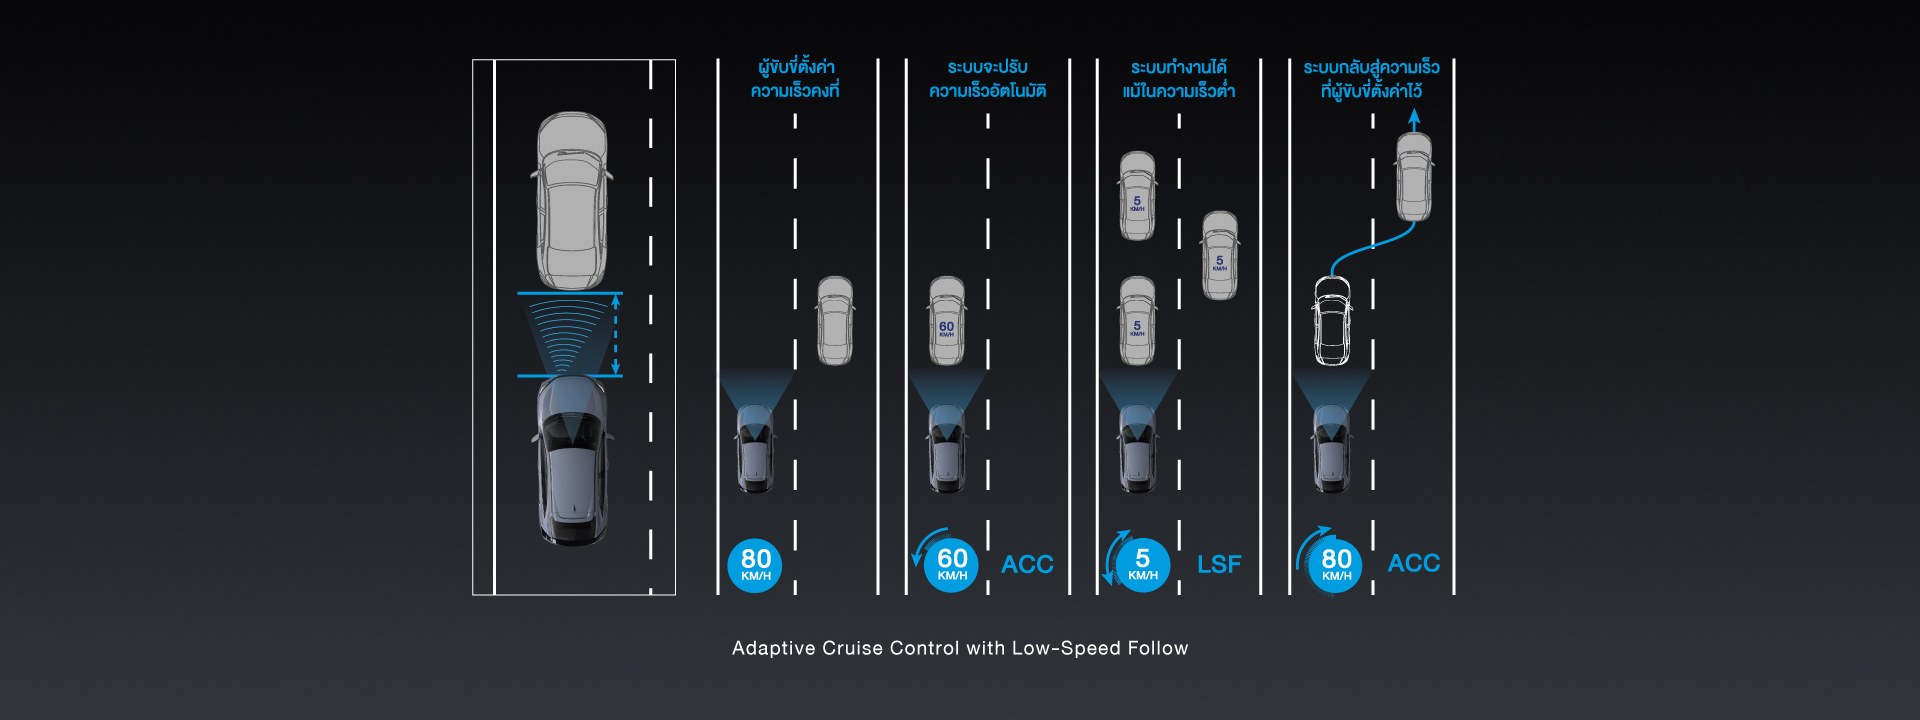 Adaptive Cruise Control with Low-Speed Follow (ACC eith LFS) ระบบควบคุมความเร็วอัตโนมัติแบบแปรผัน พร้อมระบบปรับความเร็วความรถยนต์คันหน้าที่ความเร็วต่ำ